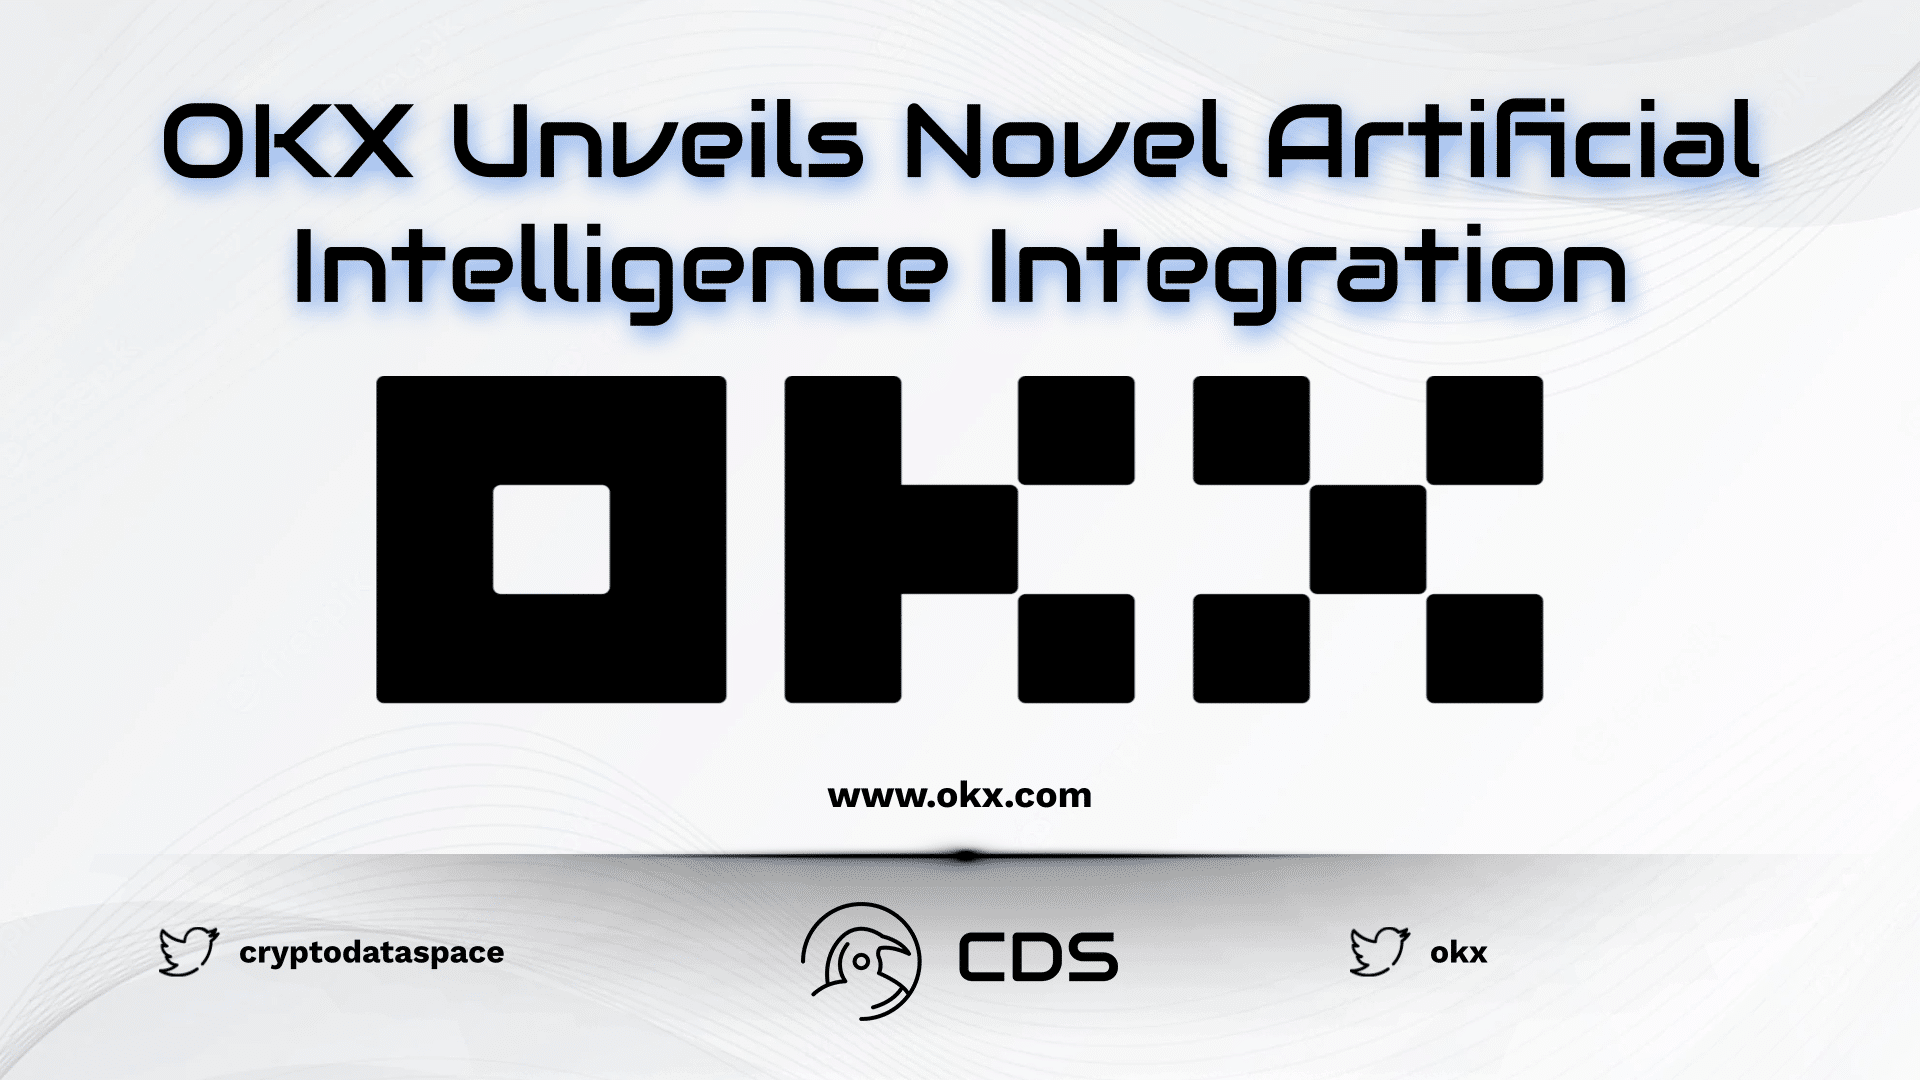 OKX Unveils Novel Artificial Intelligence Integration